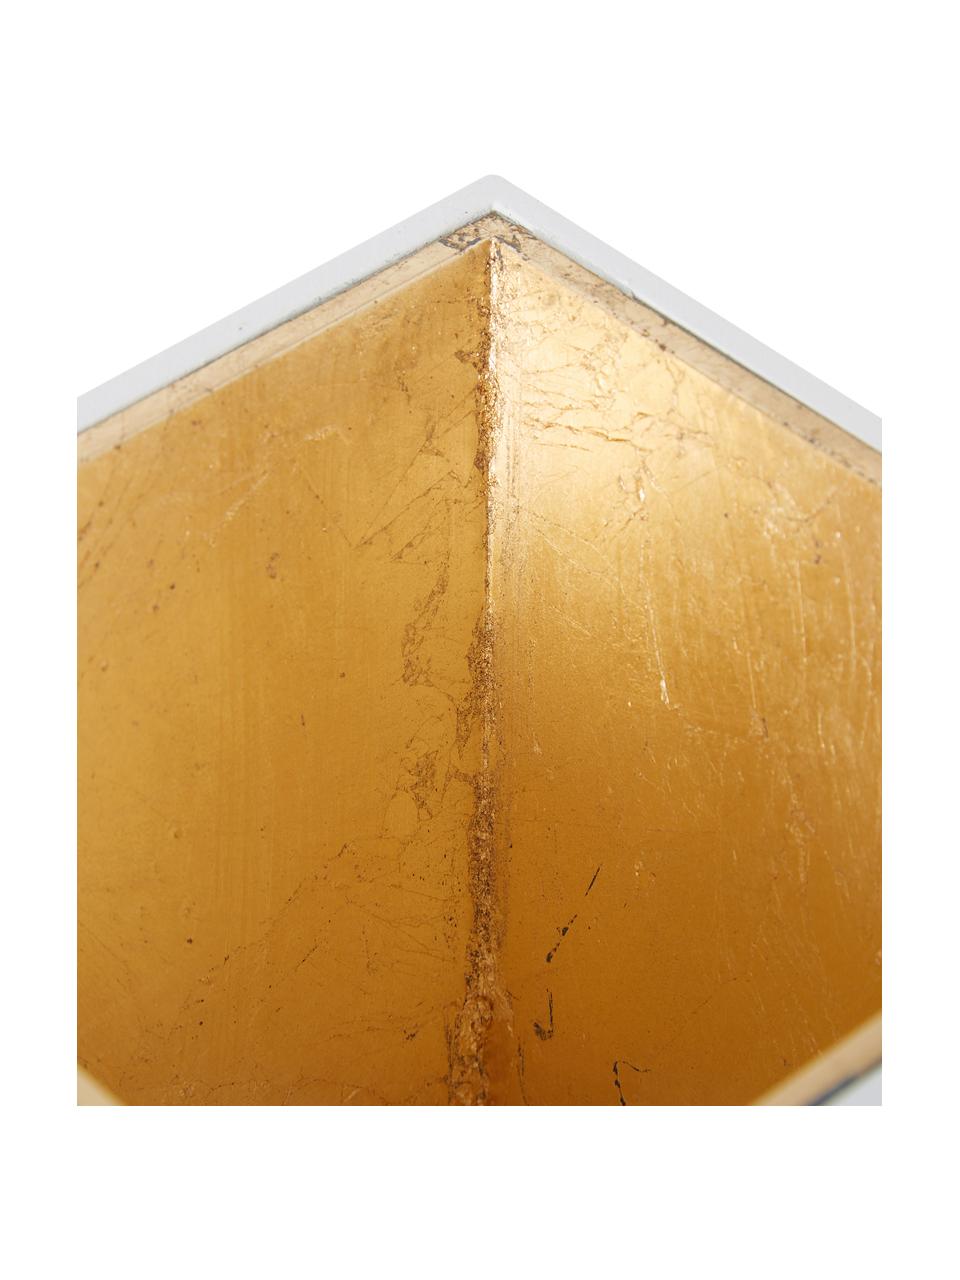 LED-Deckenspot Marty-Gold mit Antik-Finish, Weiß, Goldfarben, B 10 x H 12 cm